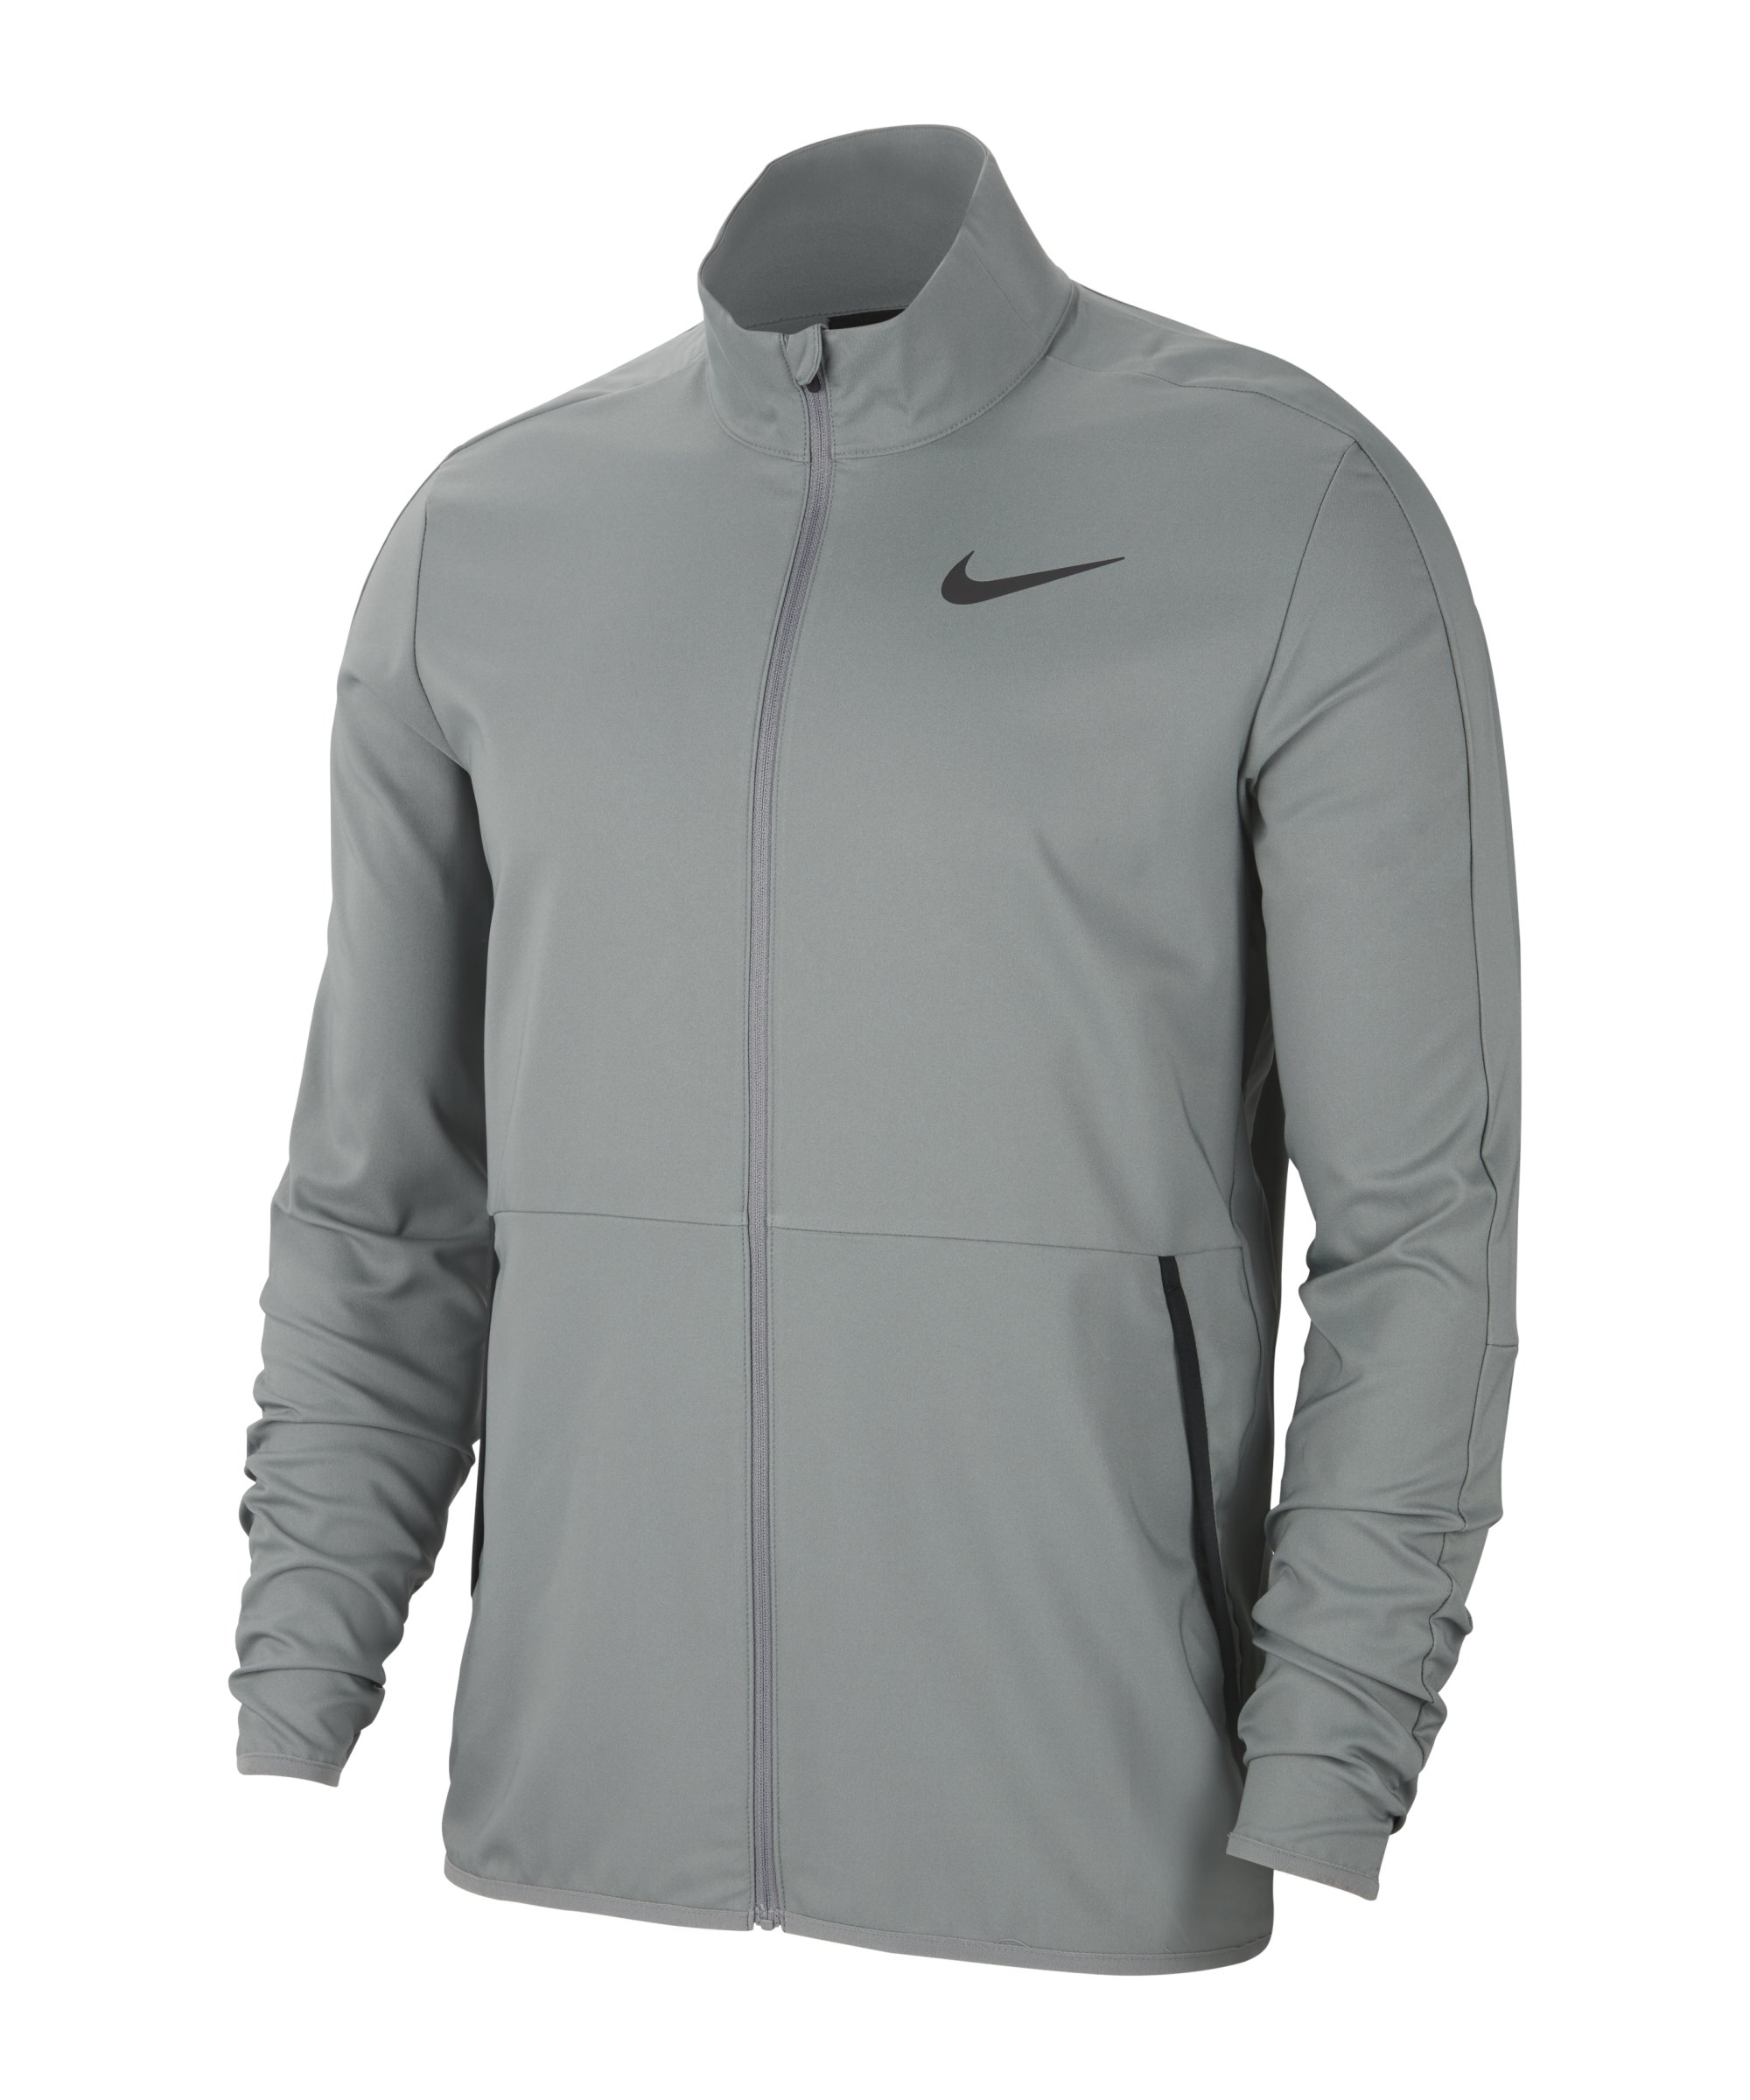 Nike Dri-FIT Woven Jacke Tall Grau Schwarz F084 - grau